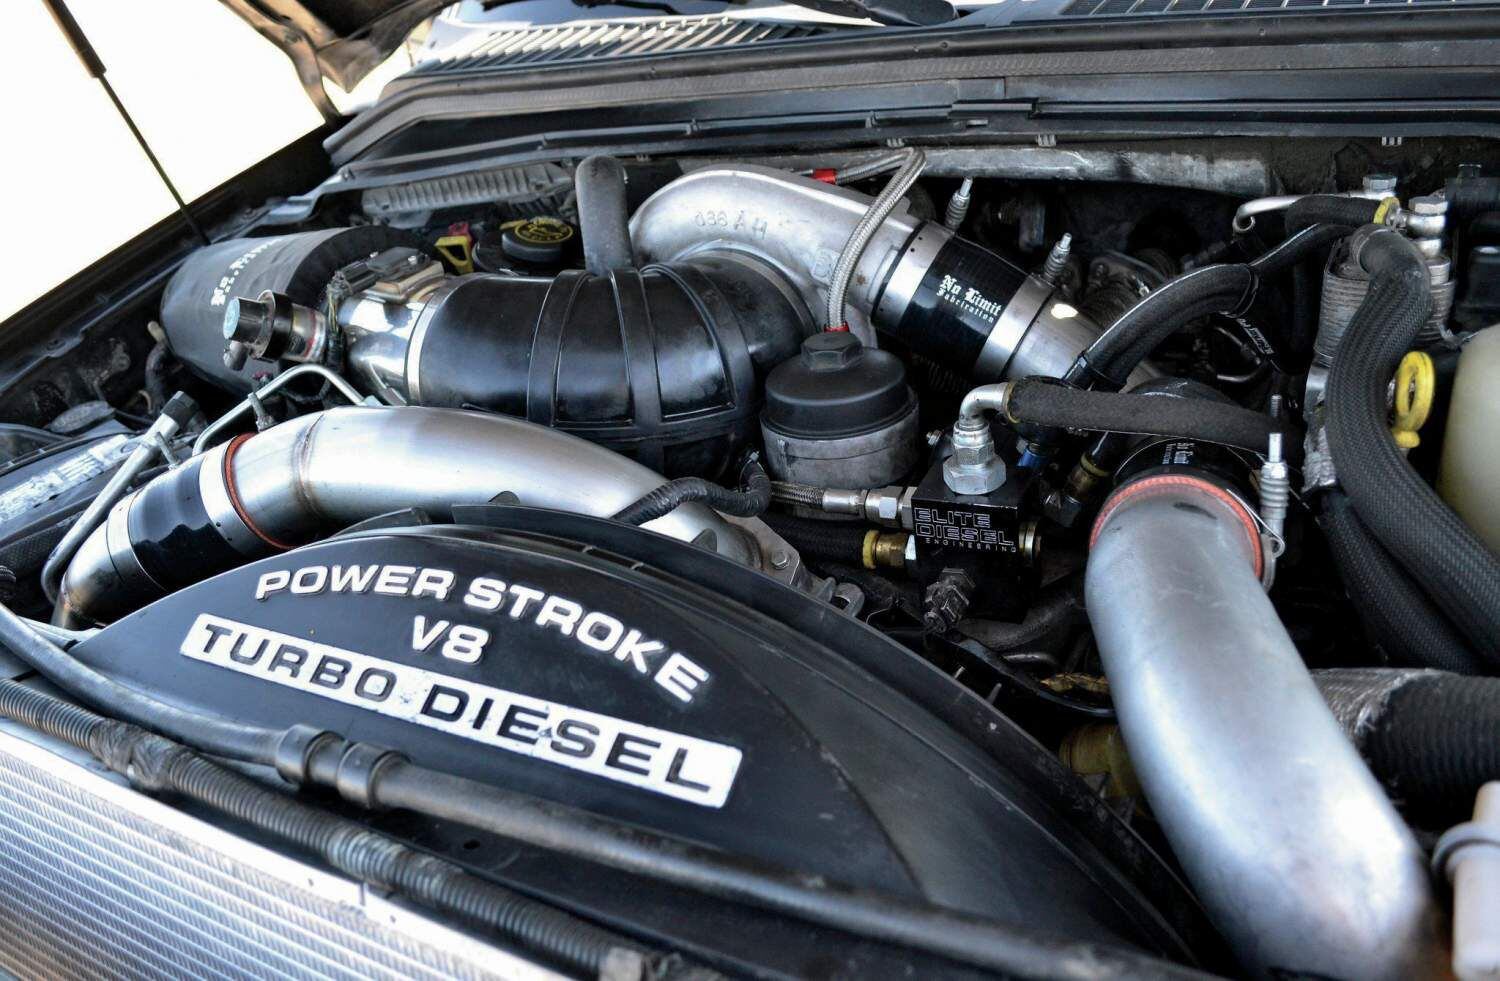 6.350. Ford f350 6.4 Diesel двигатель. Diesel Power v8. 6.4 Powerstroke. Ford f350 6.4 Diesel вакуумное.